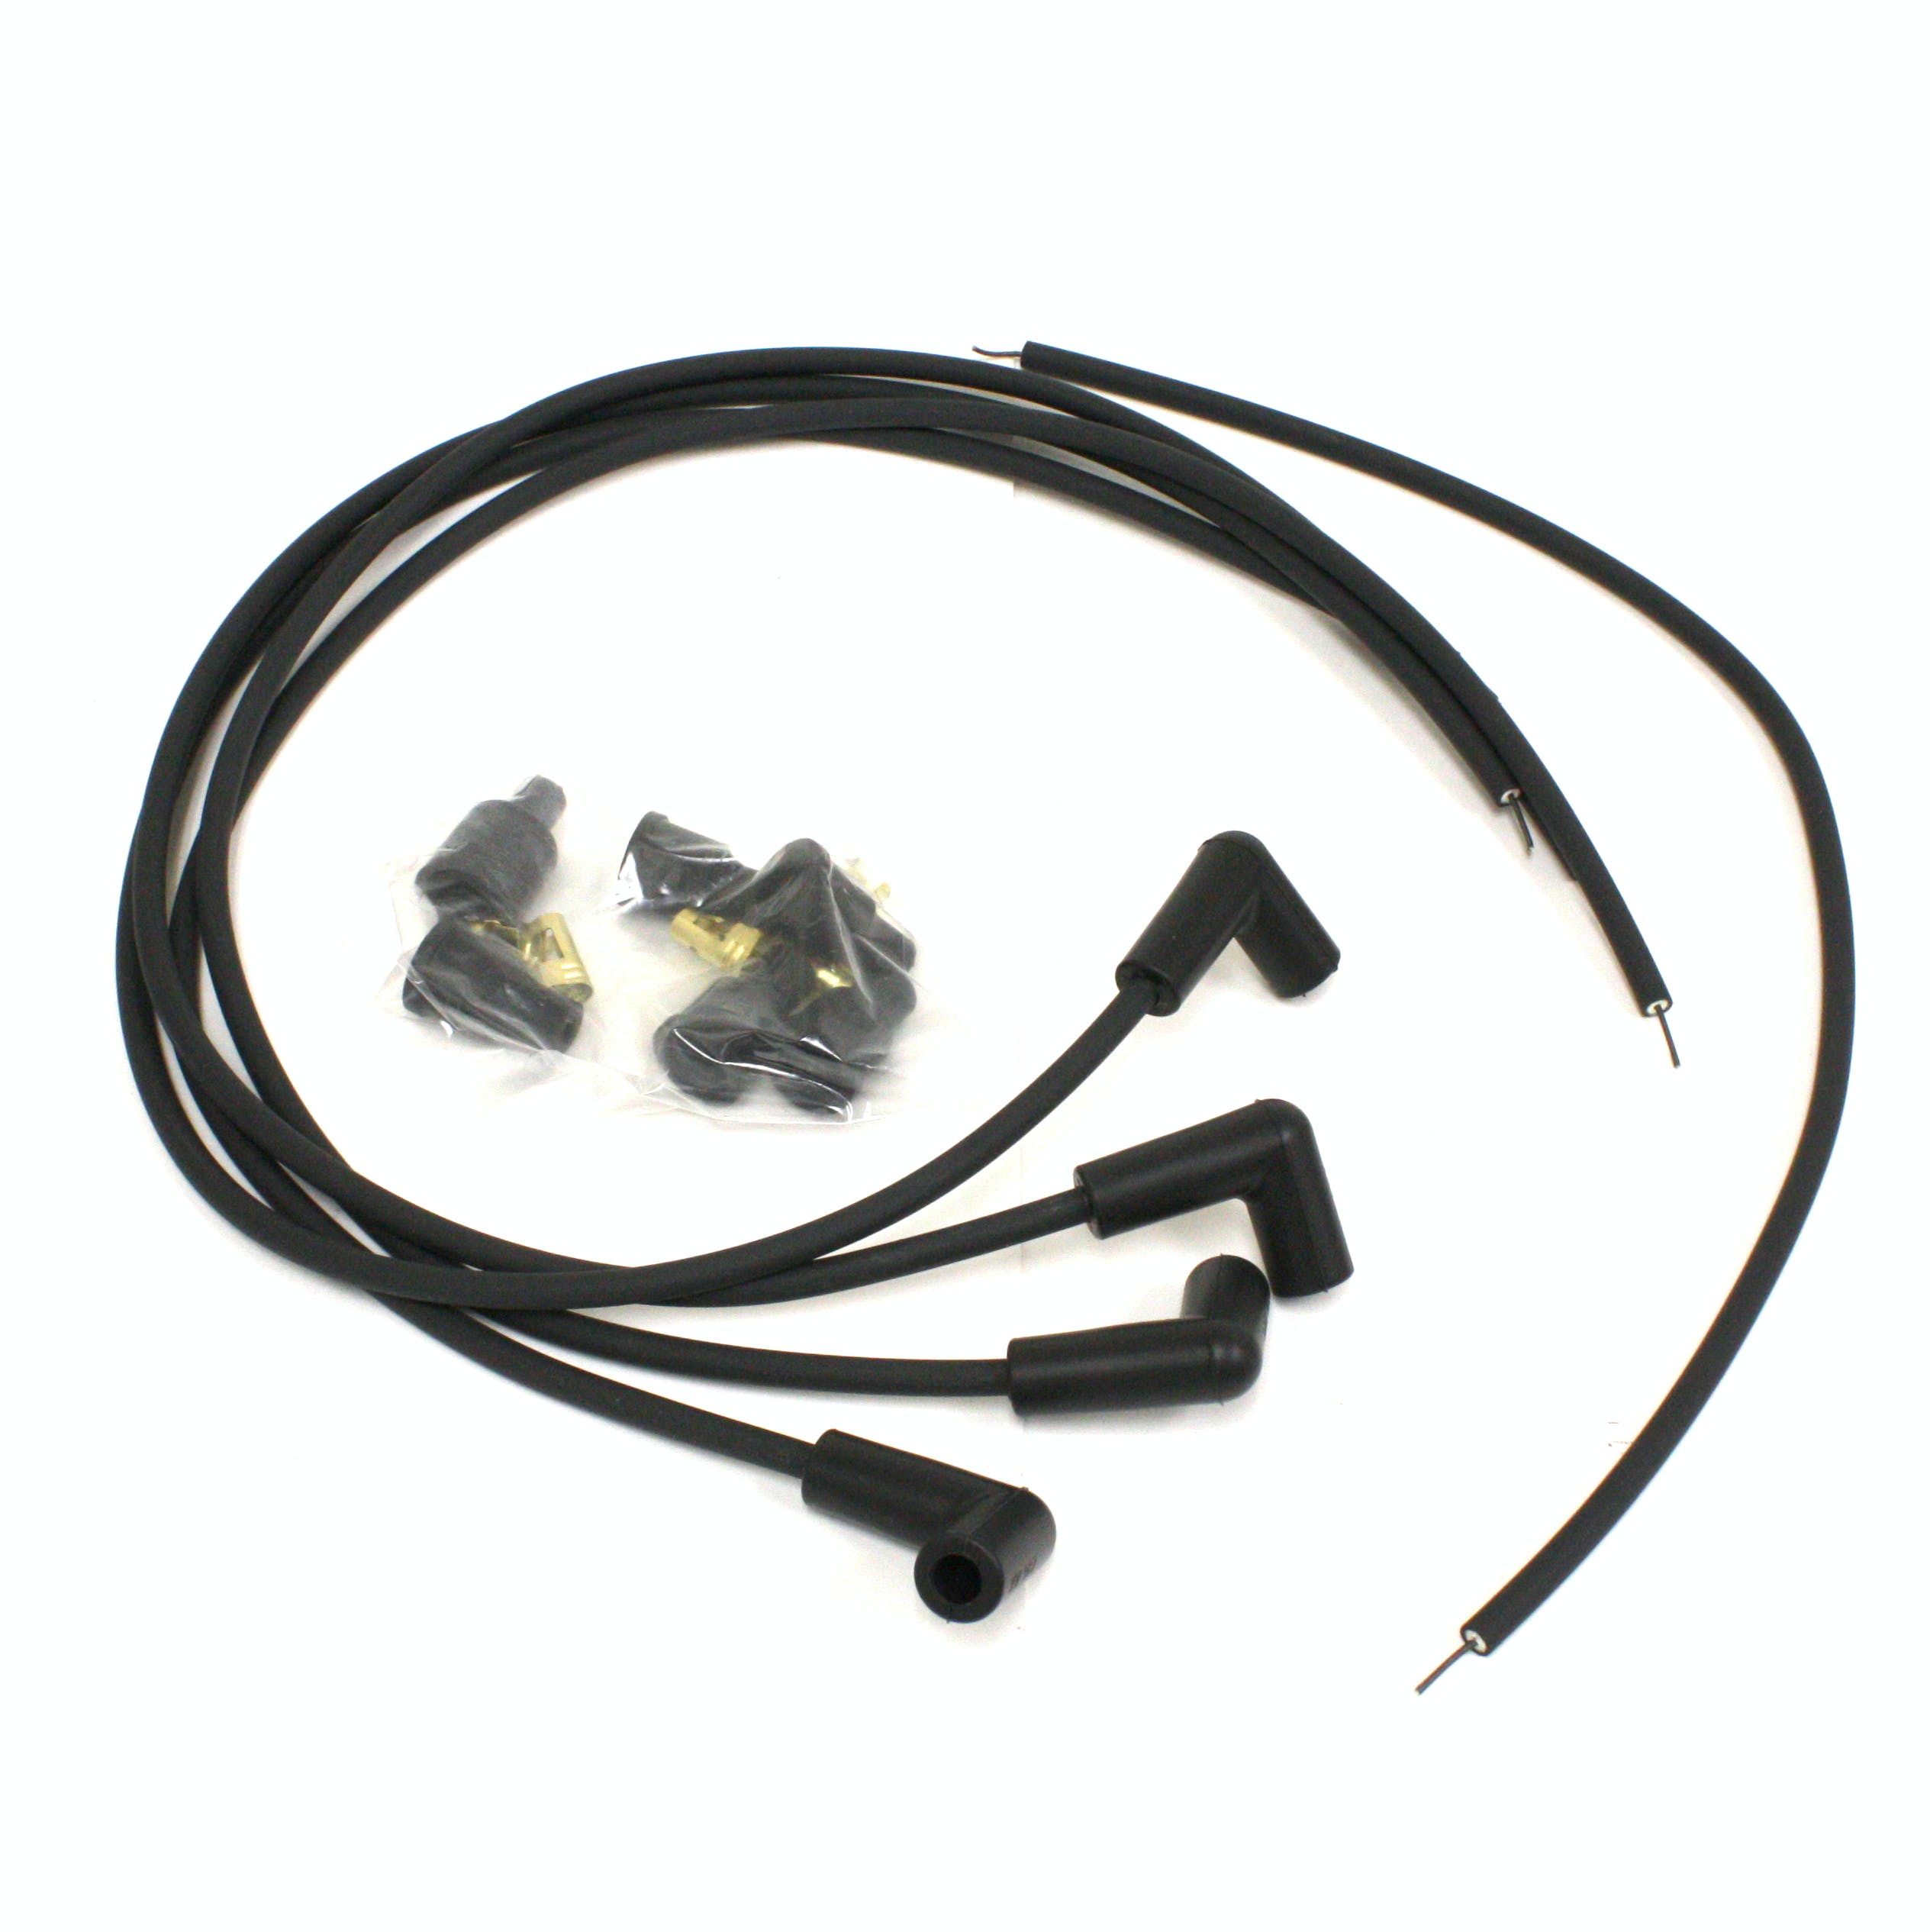 PerTronix 704190 PerTronix 704190 Spark Plug Wire Set